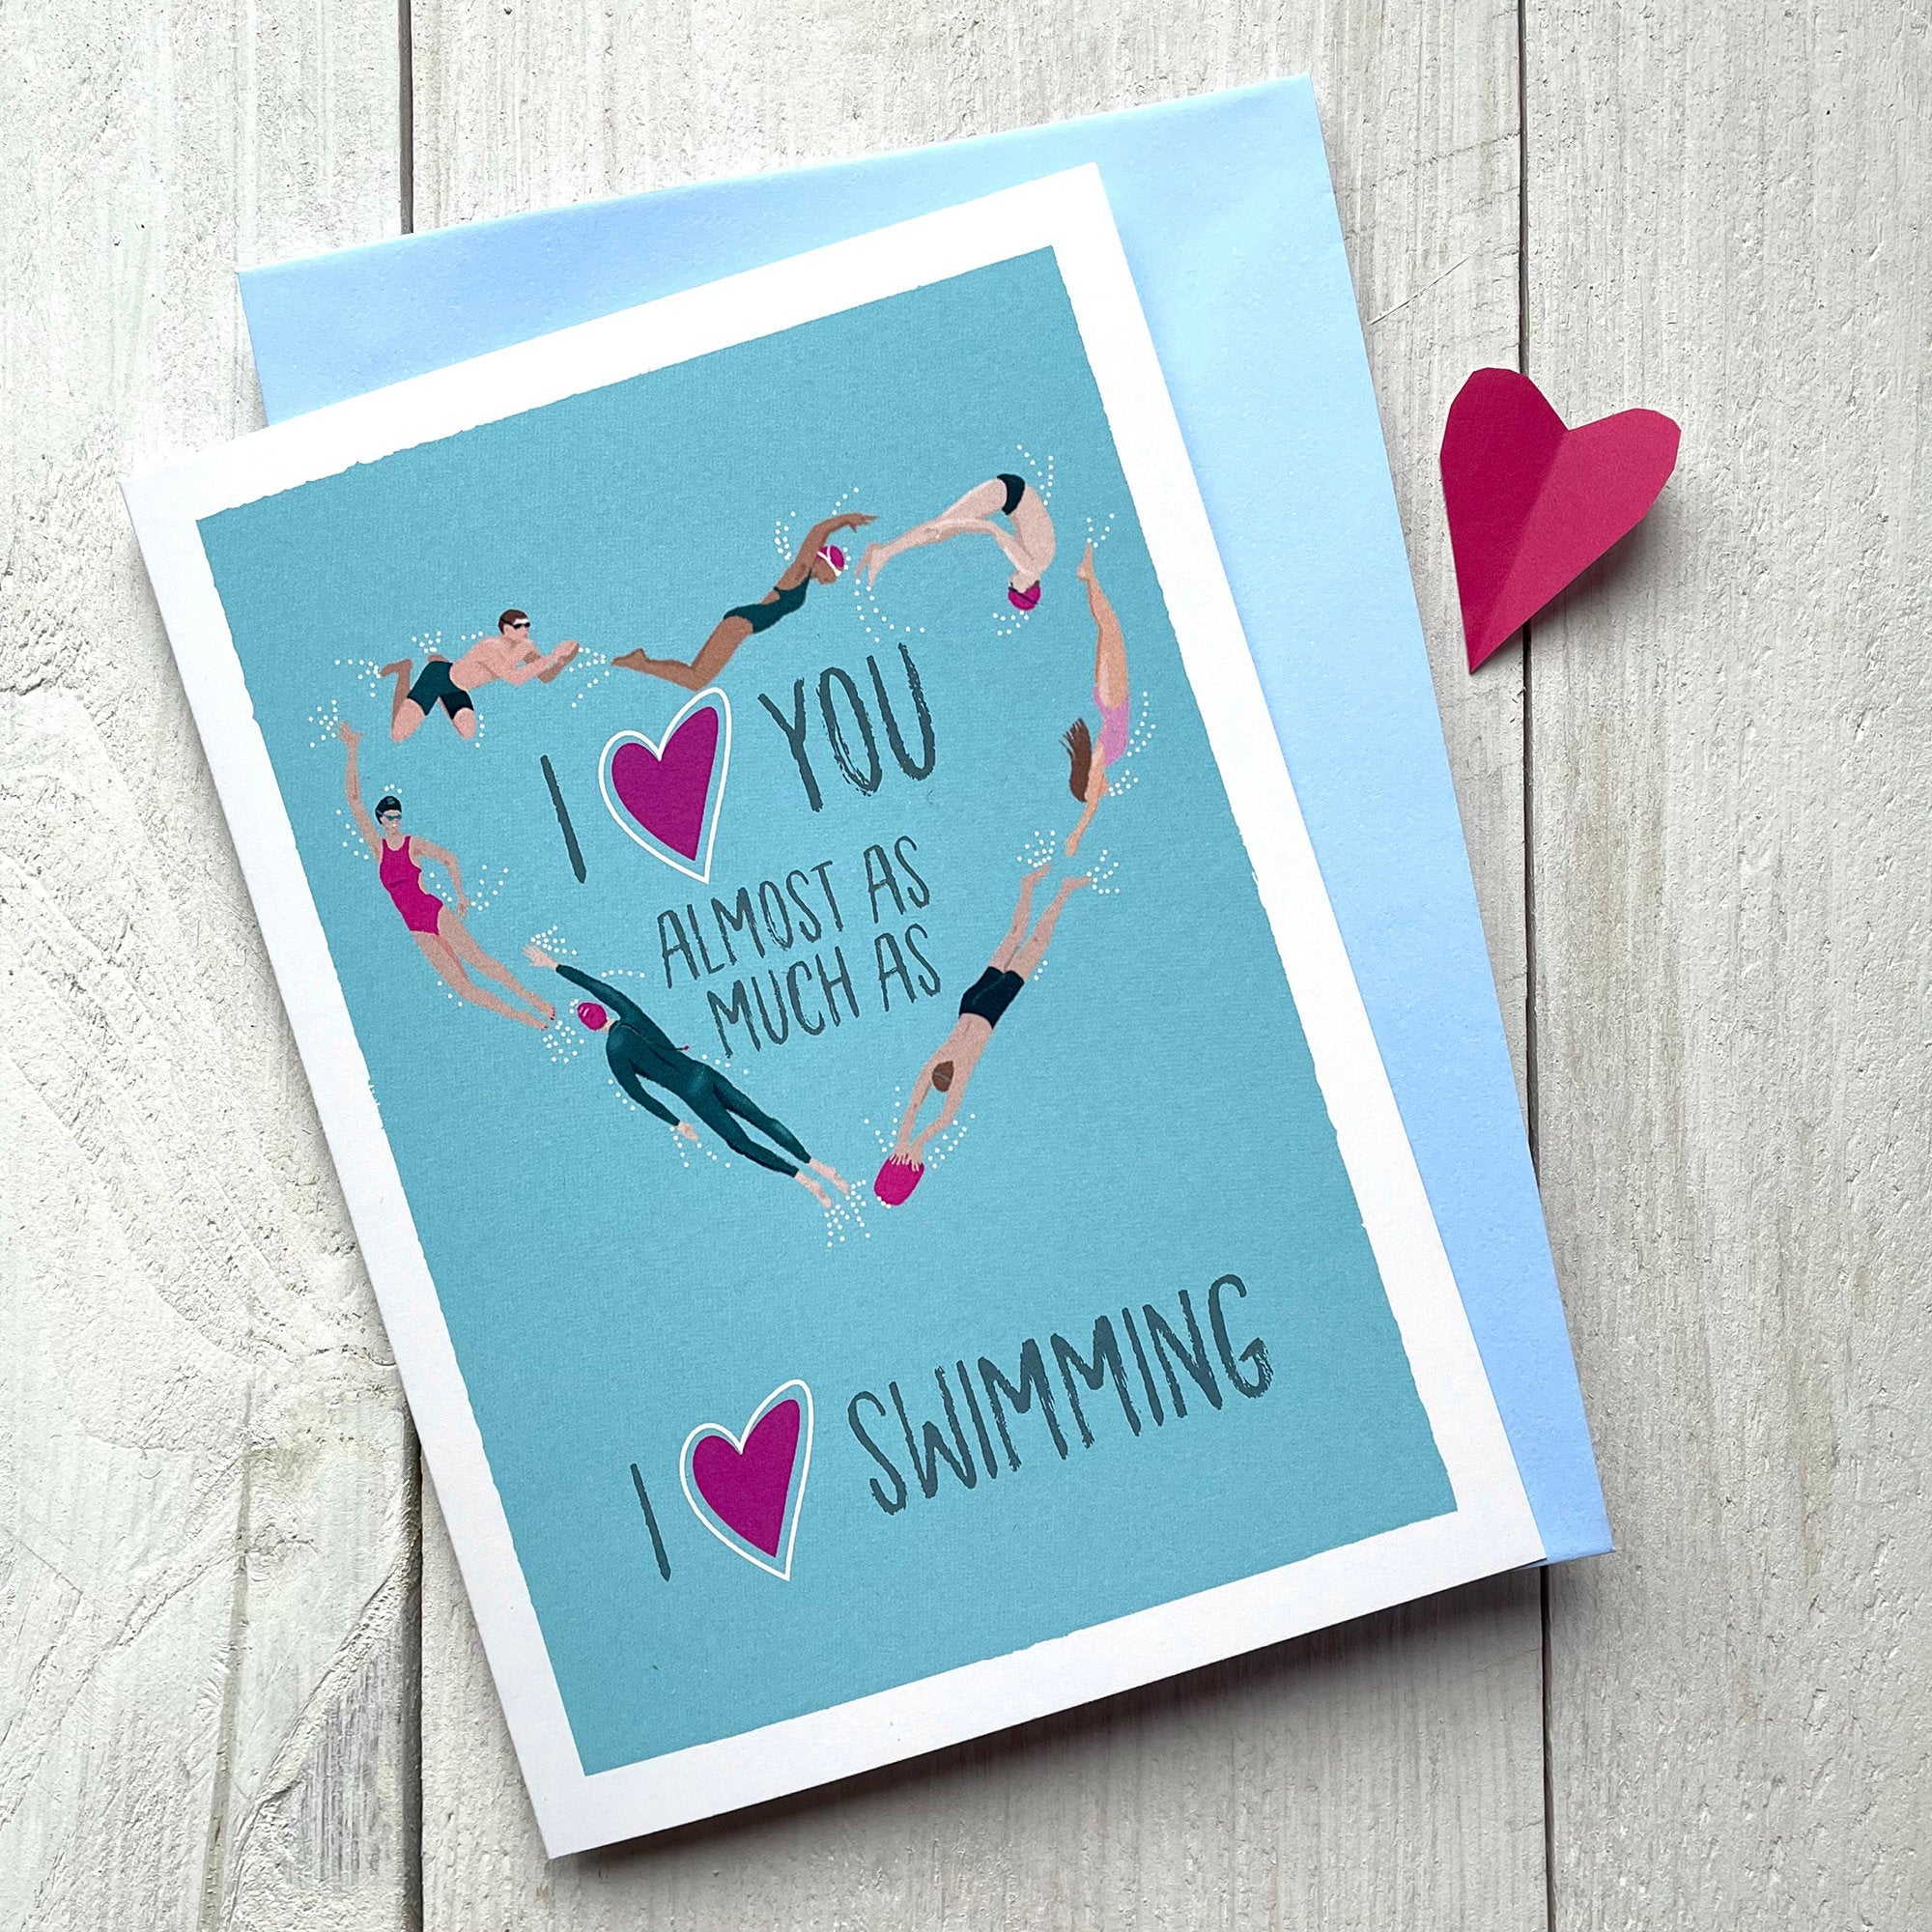 Swimming greetings card. I Love Swimming